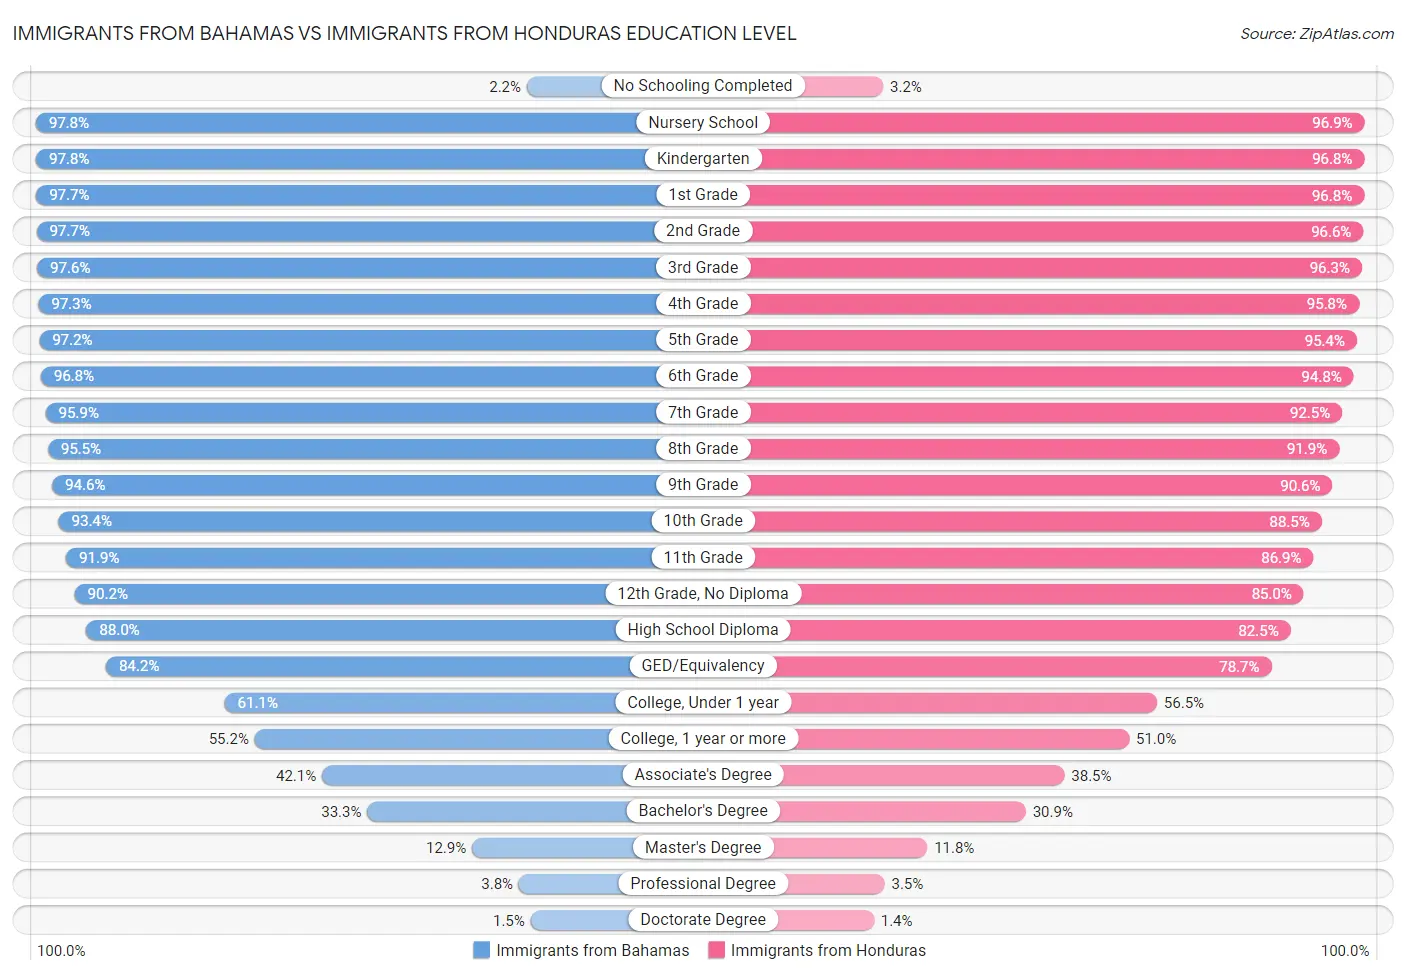 Immigrants from Bahamas vs Immigrants from Honduras Education Level